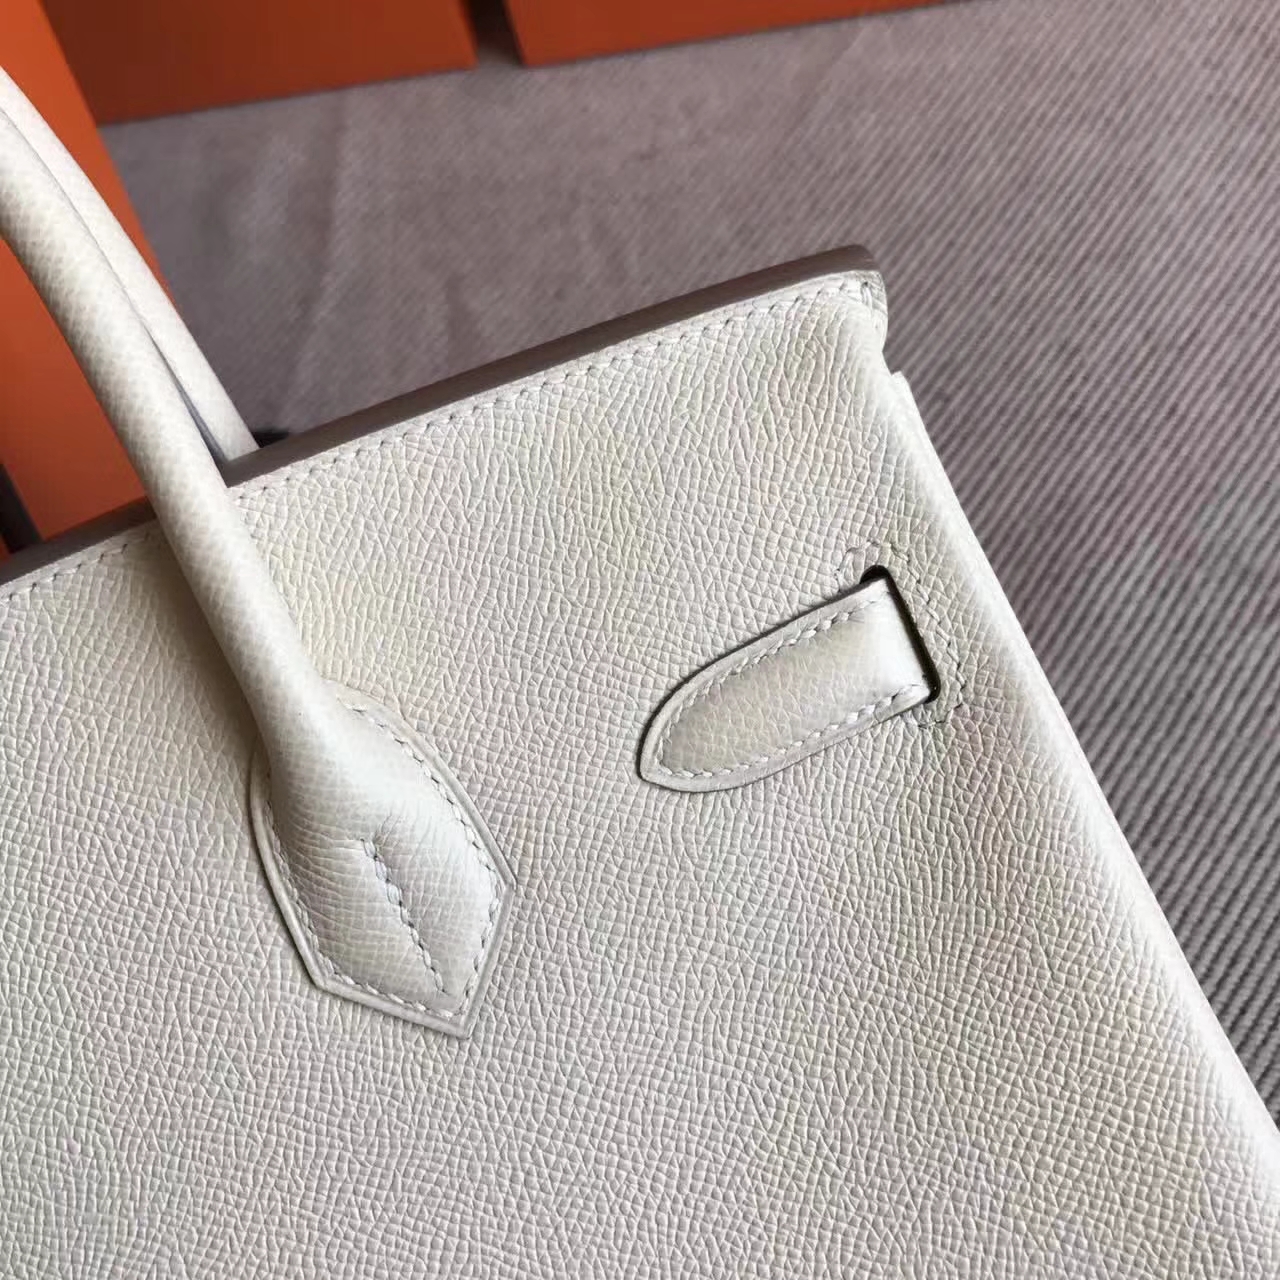 Hot Sale Hermes CK10 Carie White Epsom Leather Birkin30cm Bag